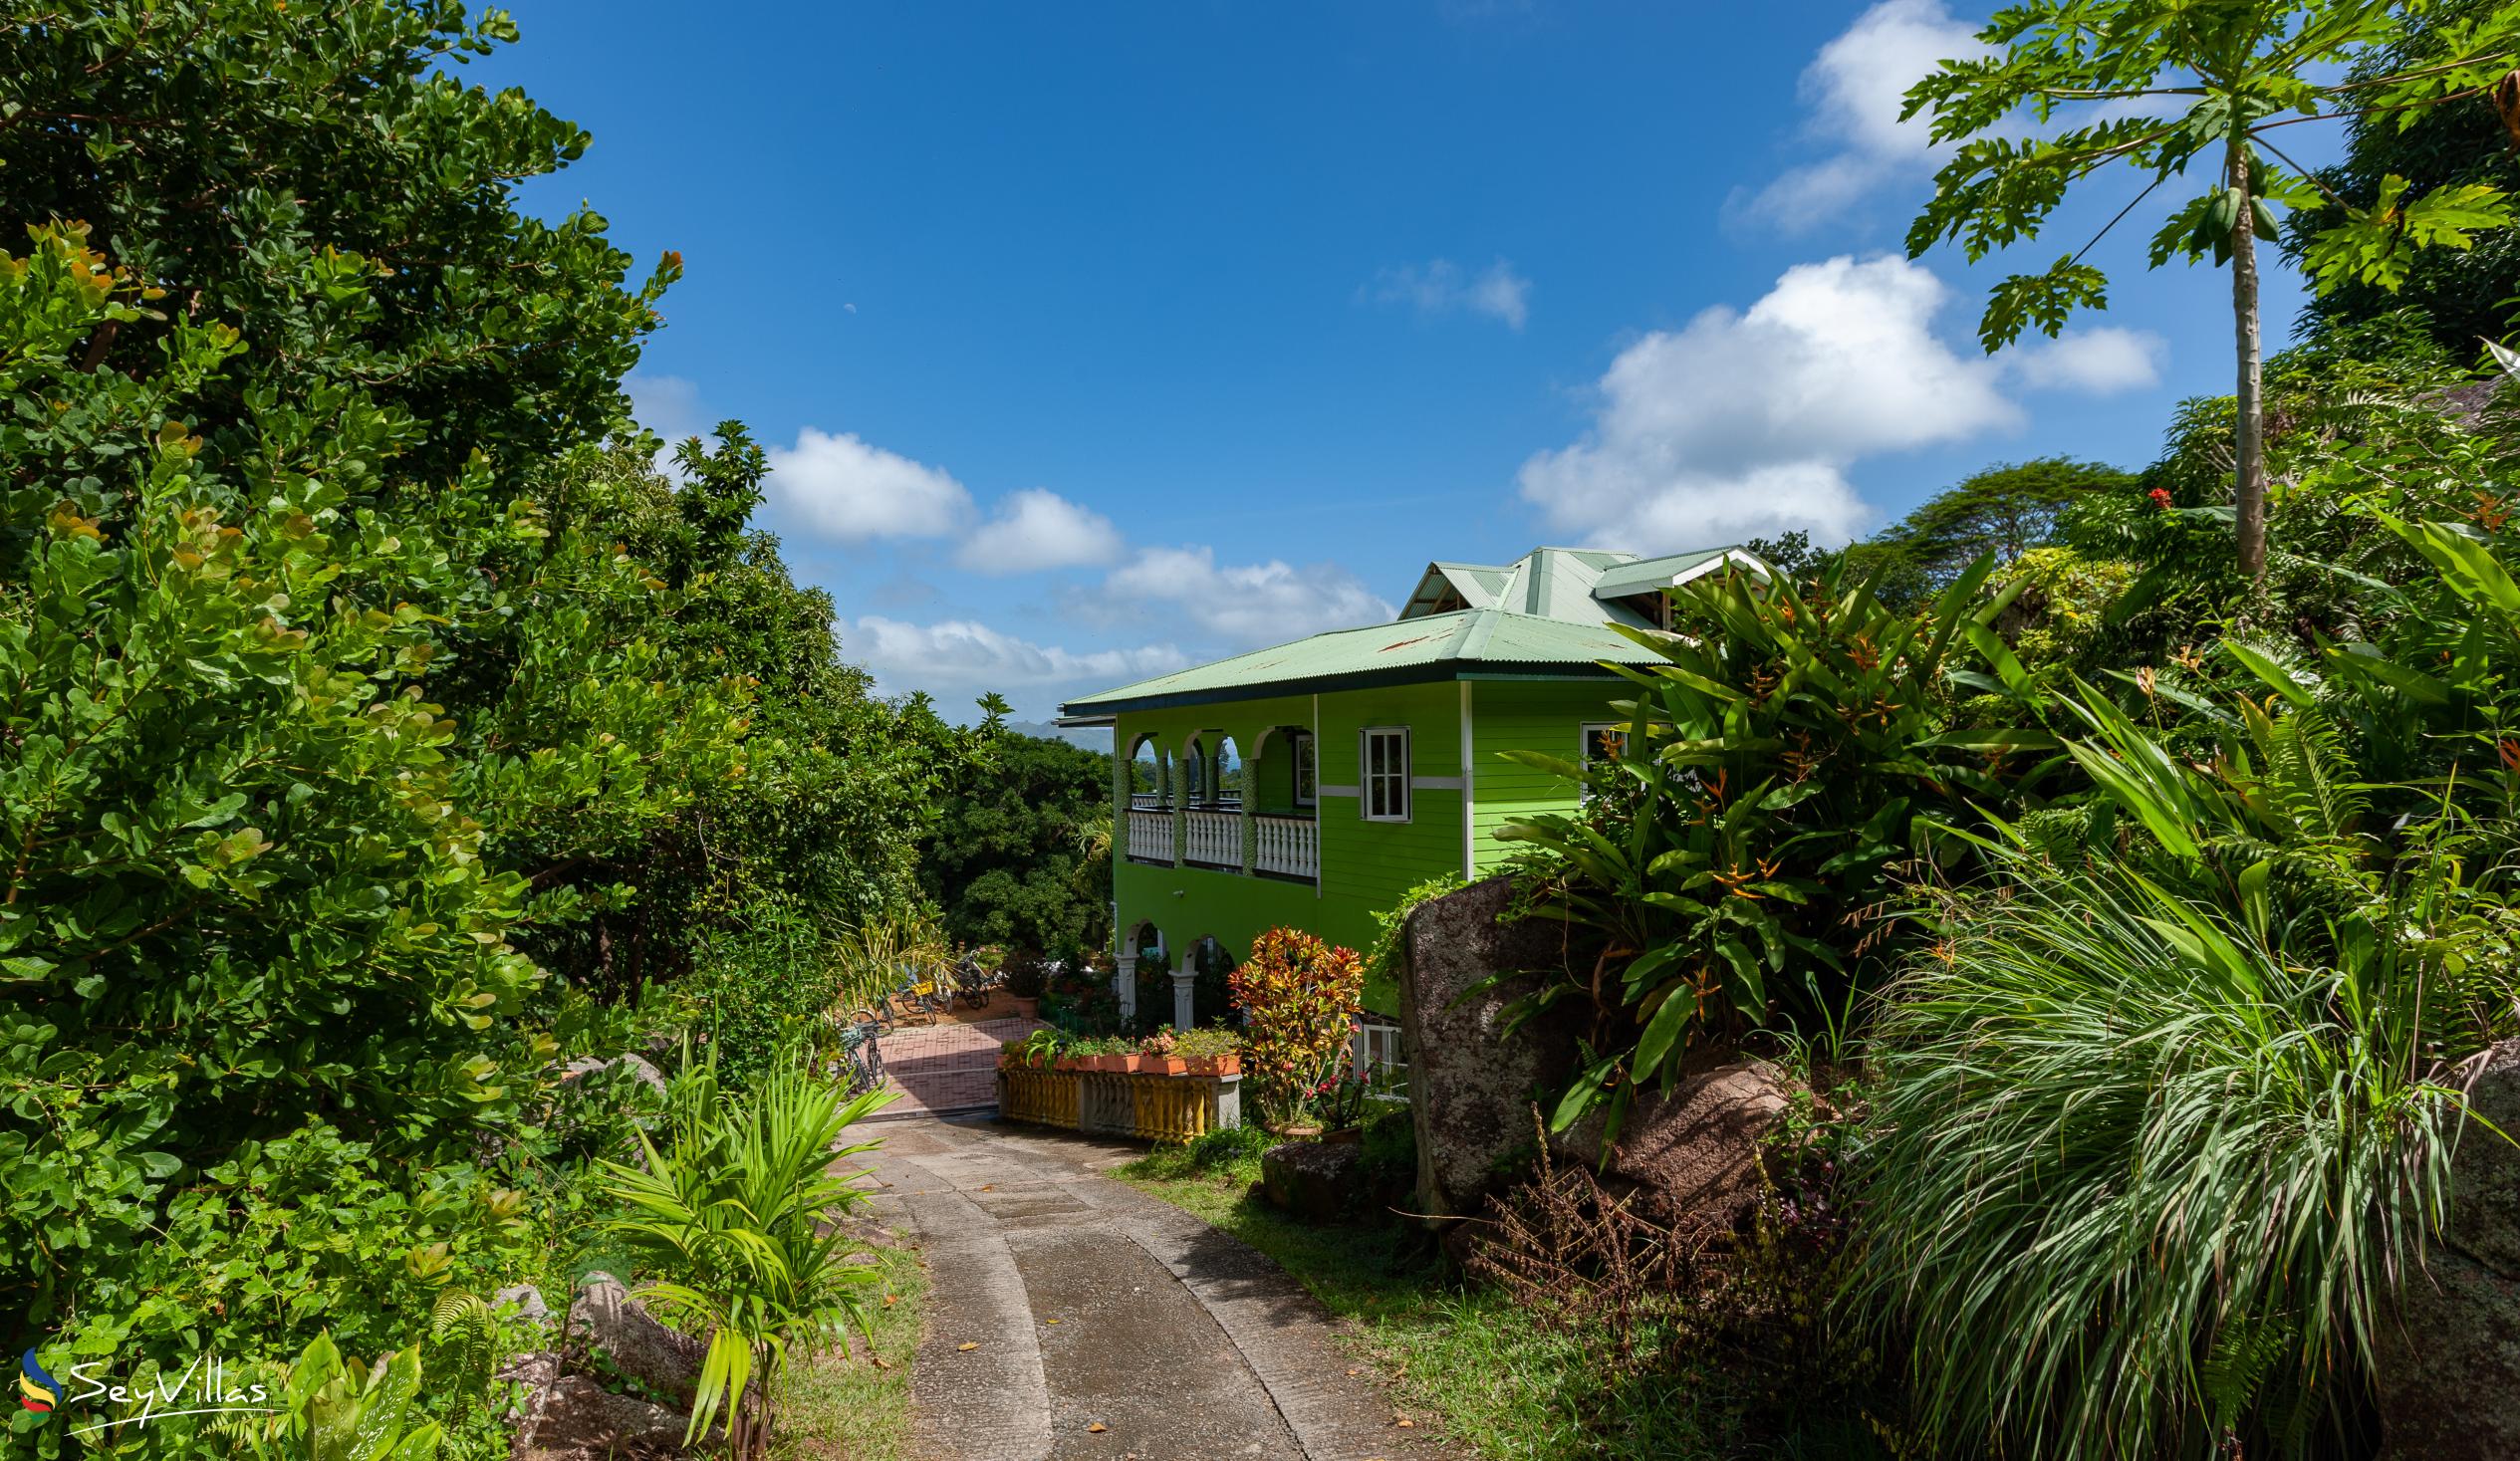 Foto 3: Villa Hortensia - Aussenbereich - La Digue (Seychellen)